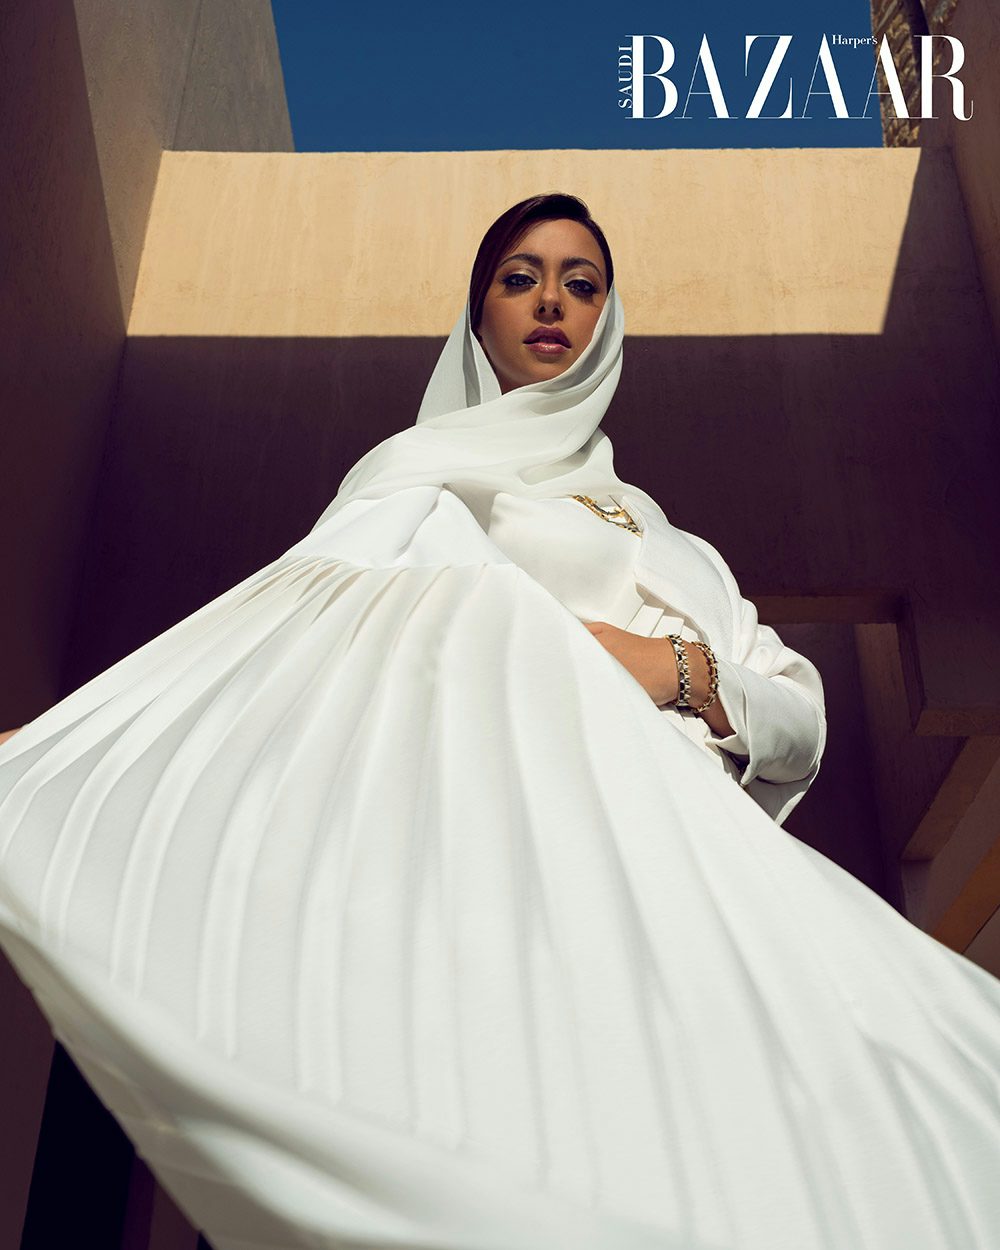 Princess Noura bint Faisal Al Saud for Harper's Bazaar Arabia. ITP Media.